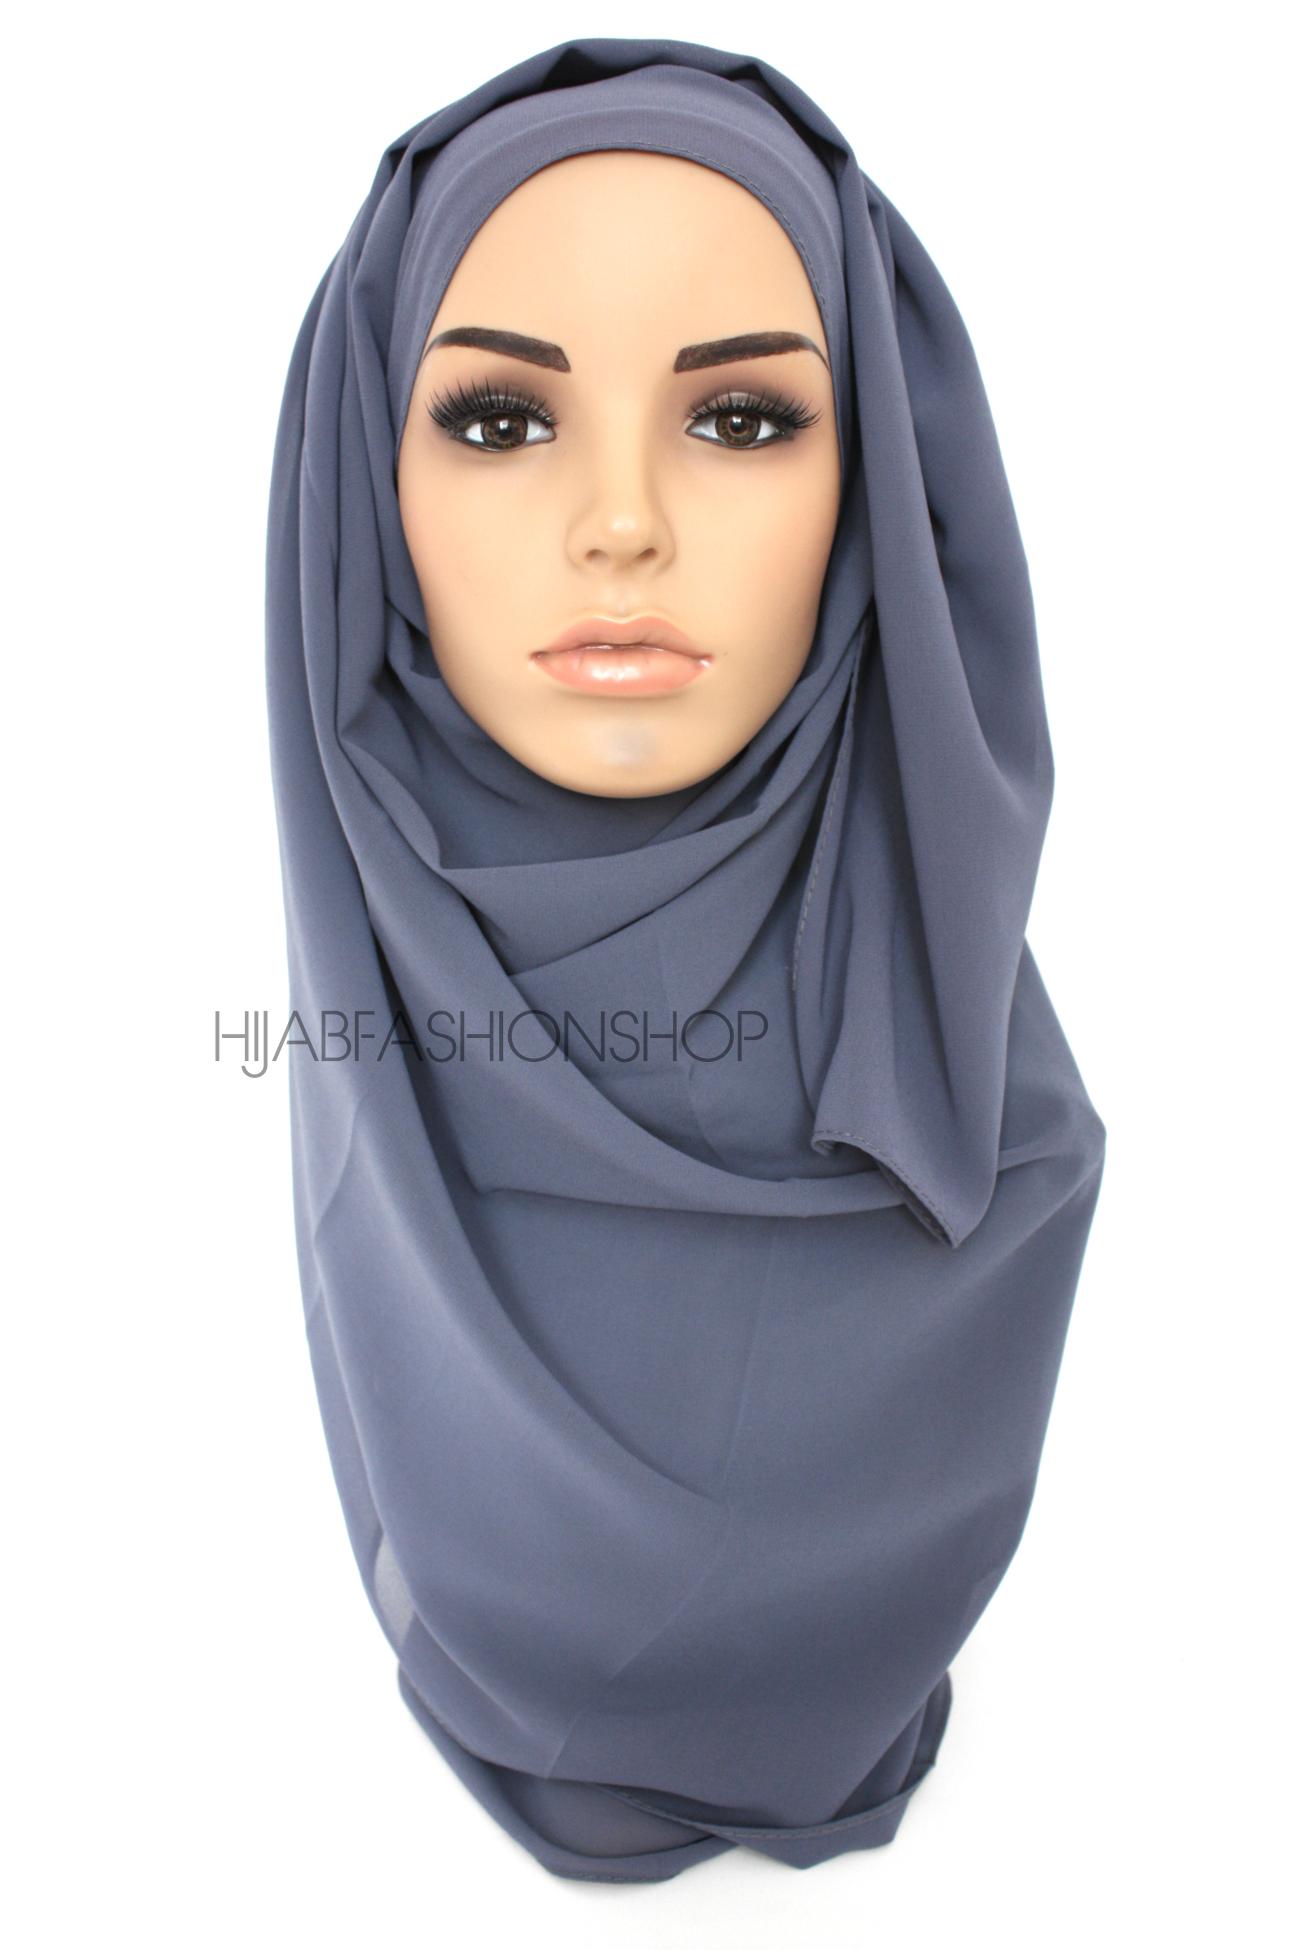 denim chiffon hijab